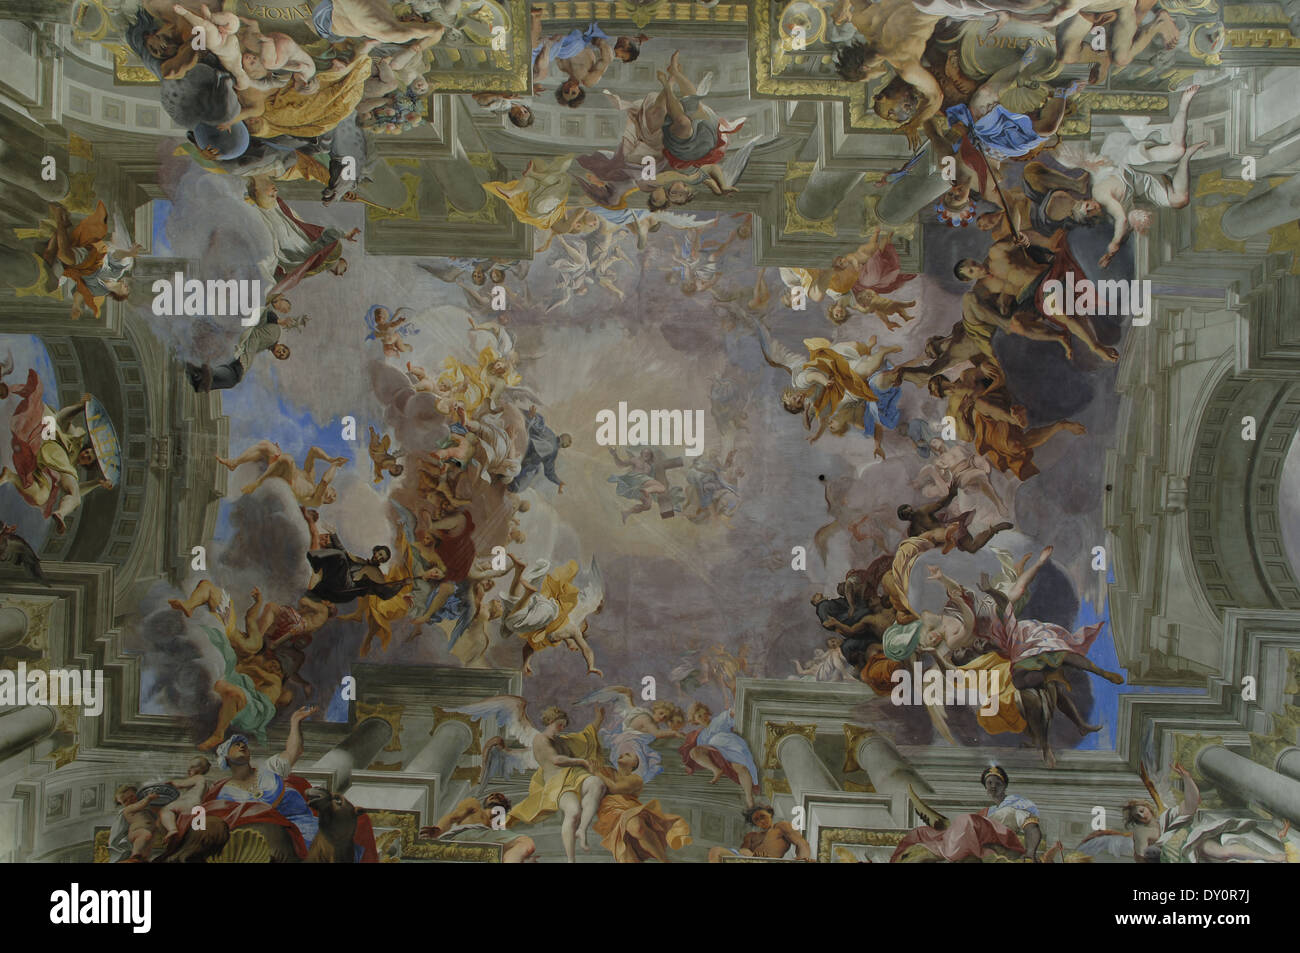 Italy. Rome. The Church of St. Ignatius of Loyola at Campus Martius. Trompe l'oeil ceiling fresco by Andrea Pozzo (1642-1709). Stock Photo